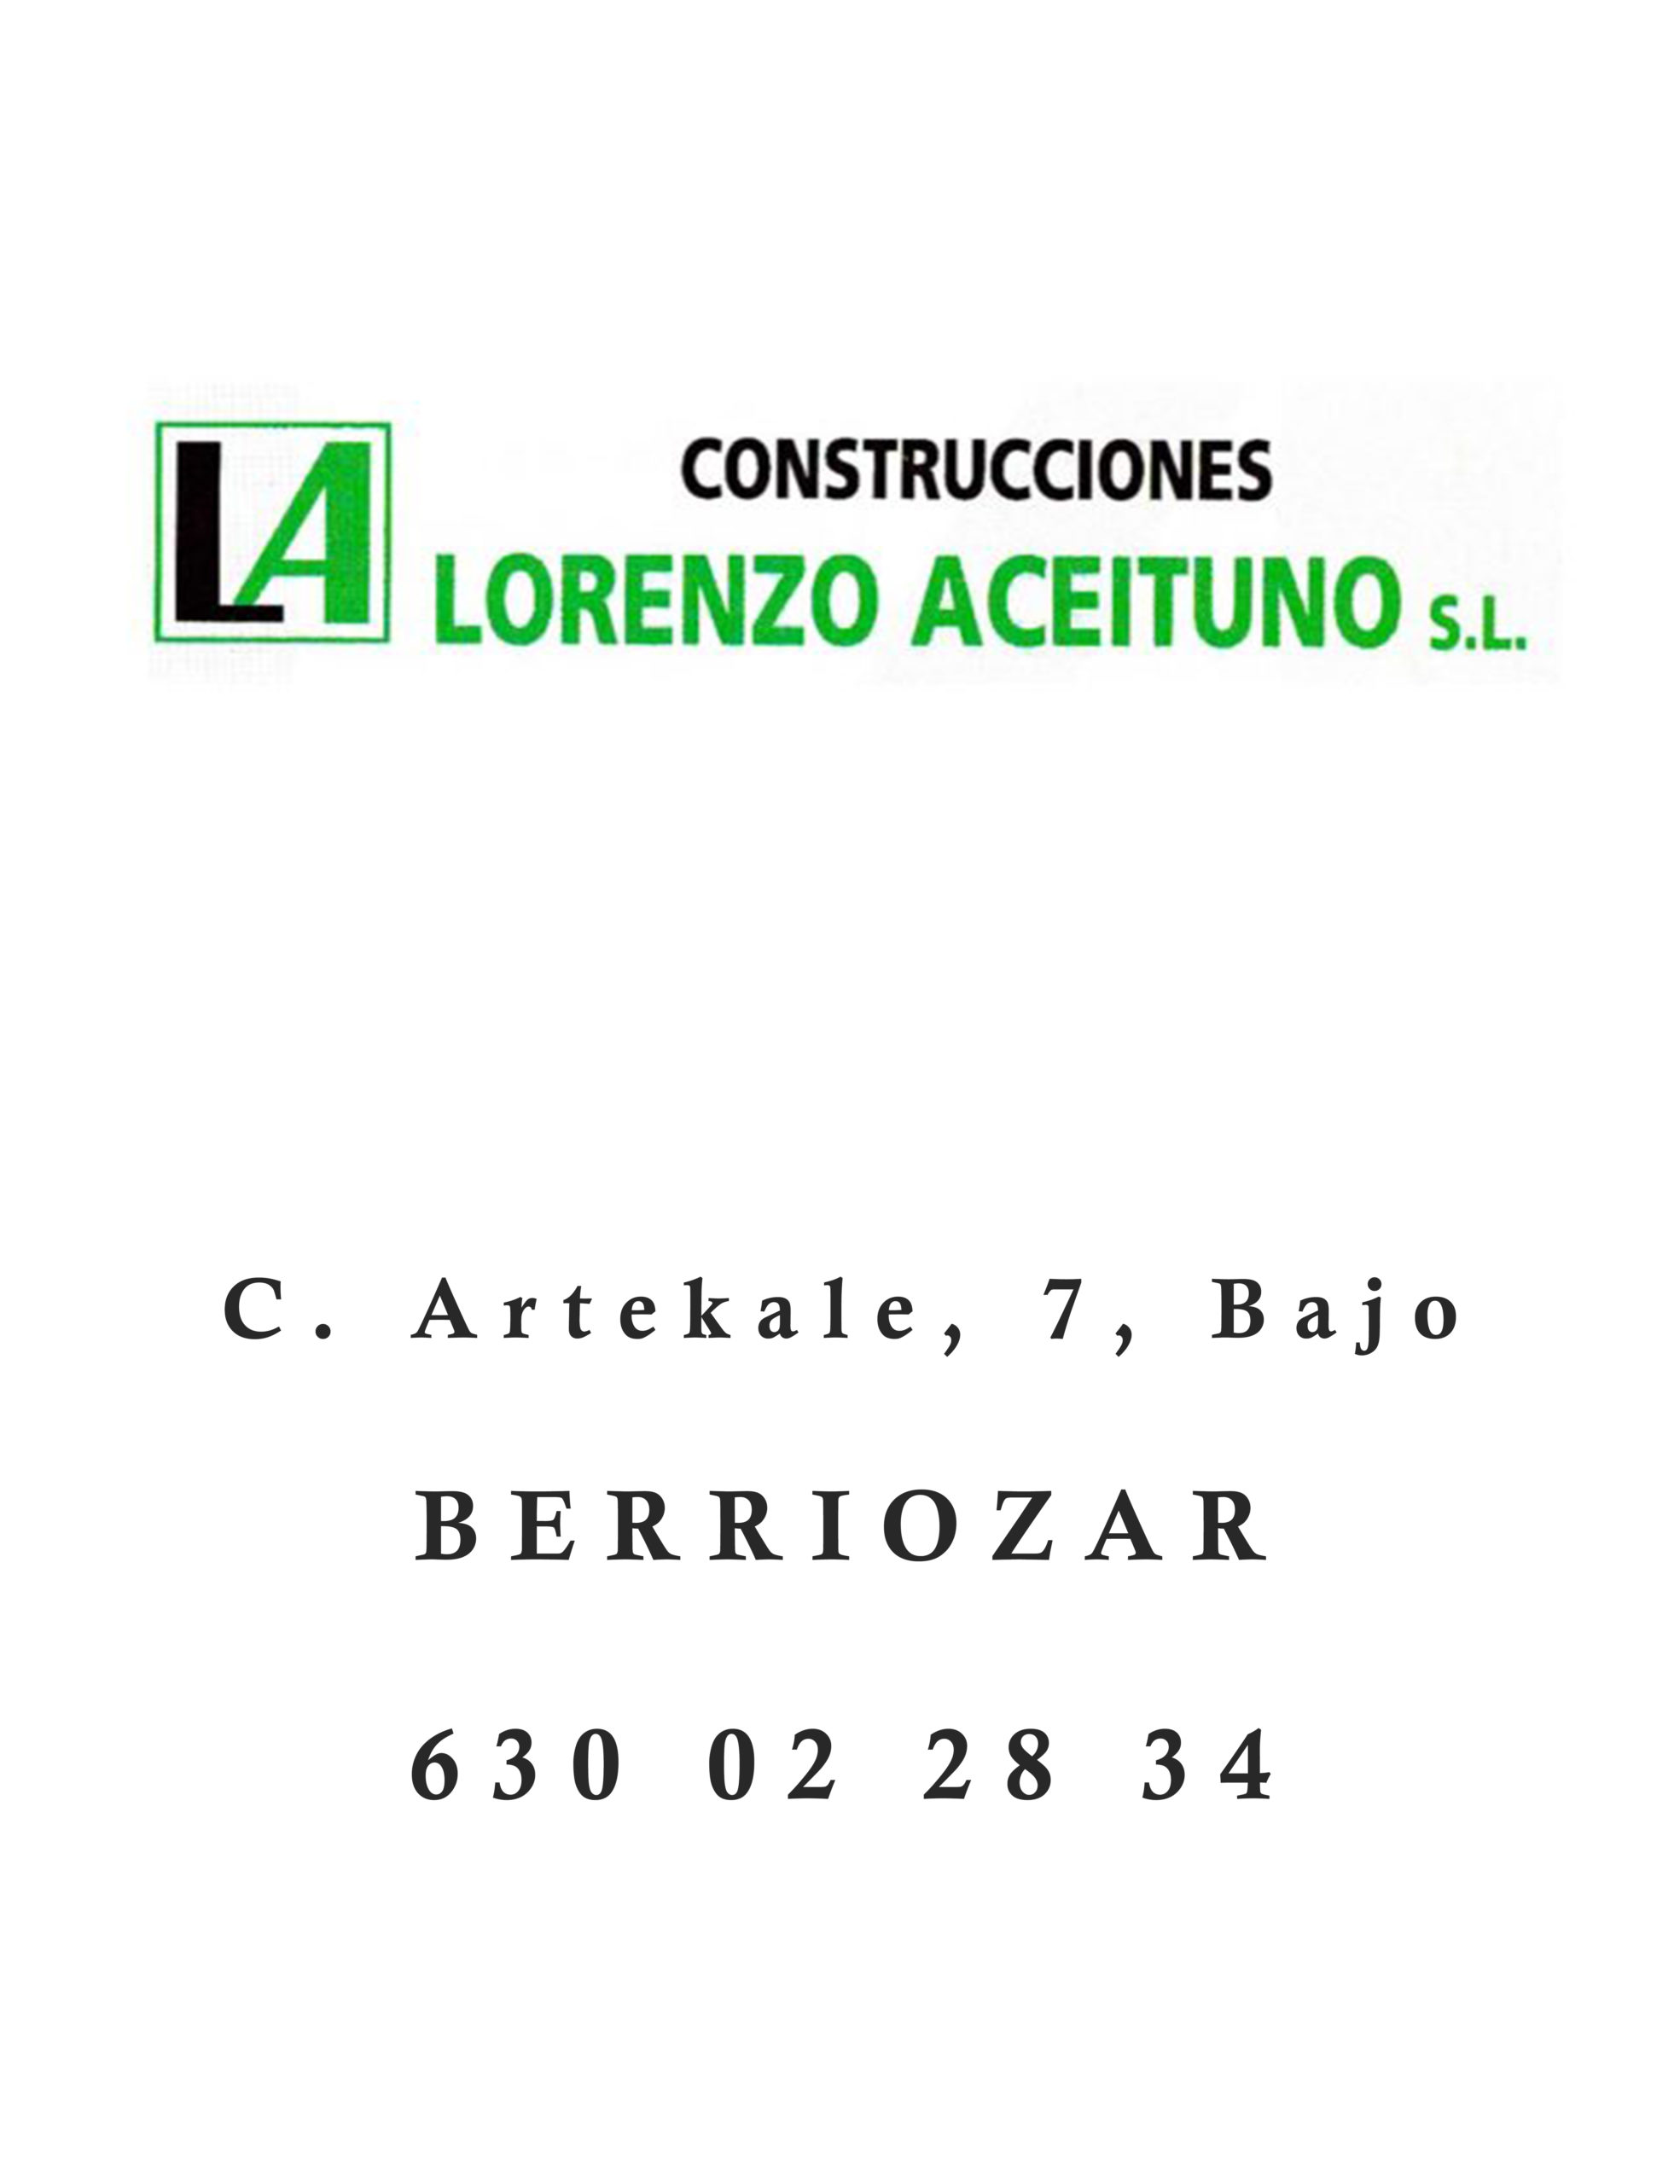 Lorenzo Aceituno